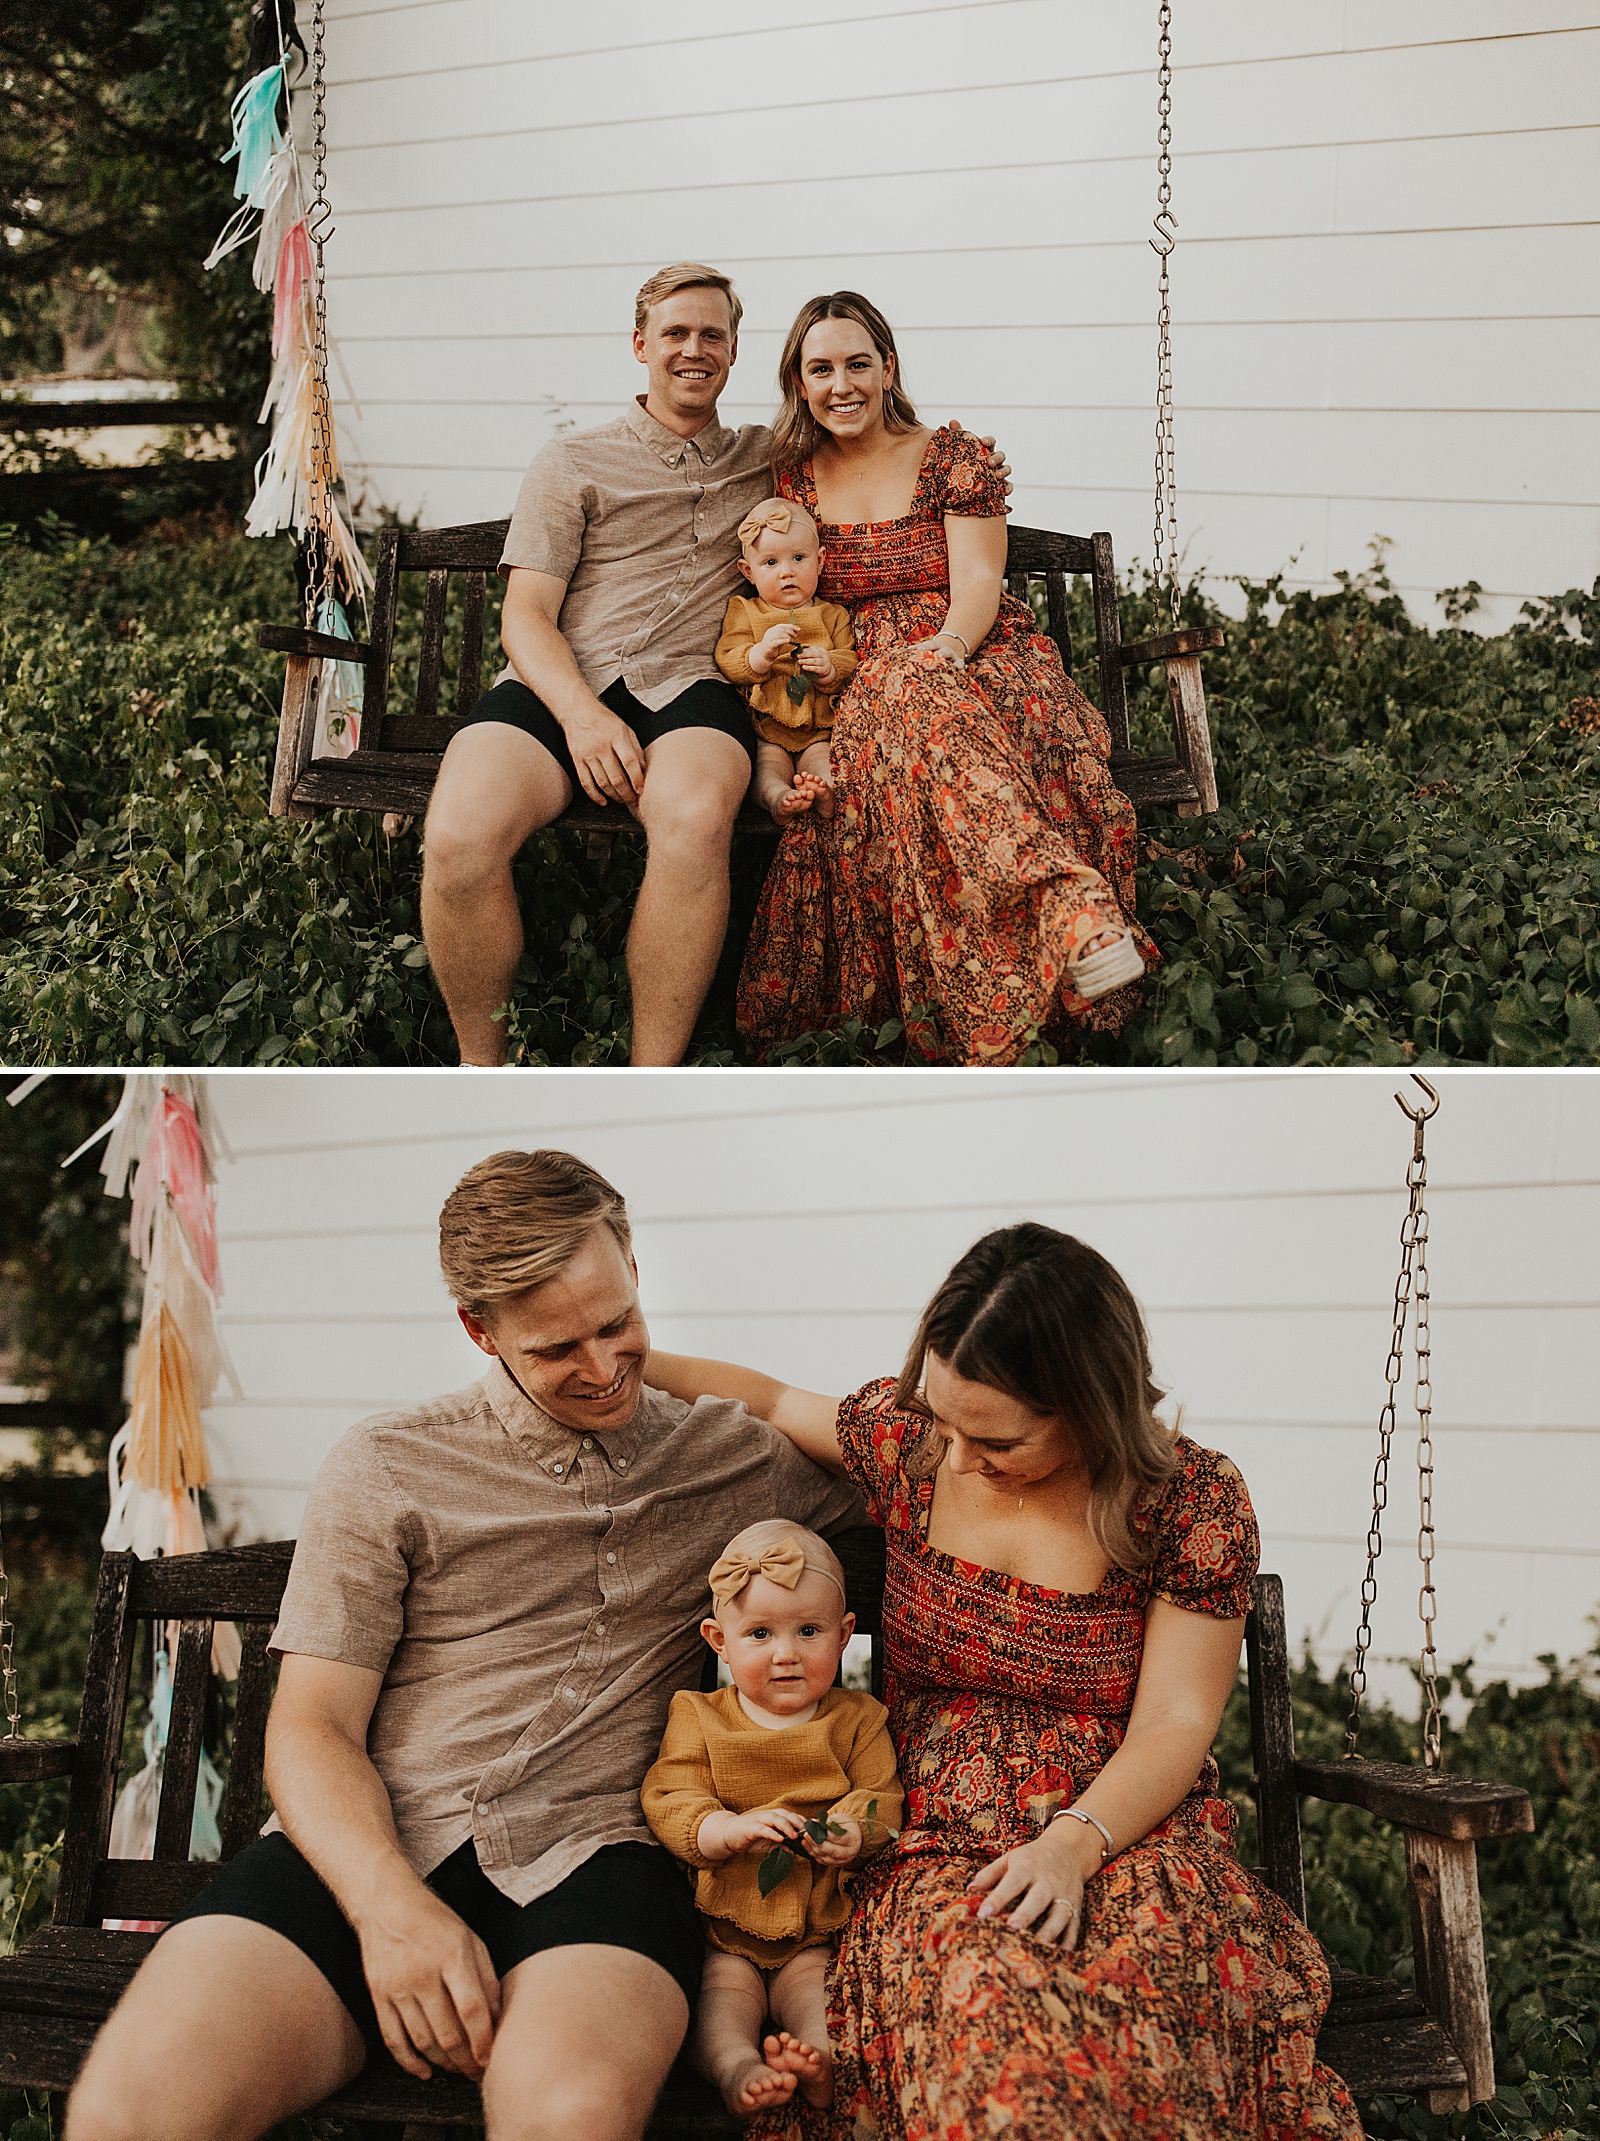 We celebrated Quinn's birthday with these summer Abilene family photos!